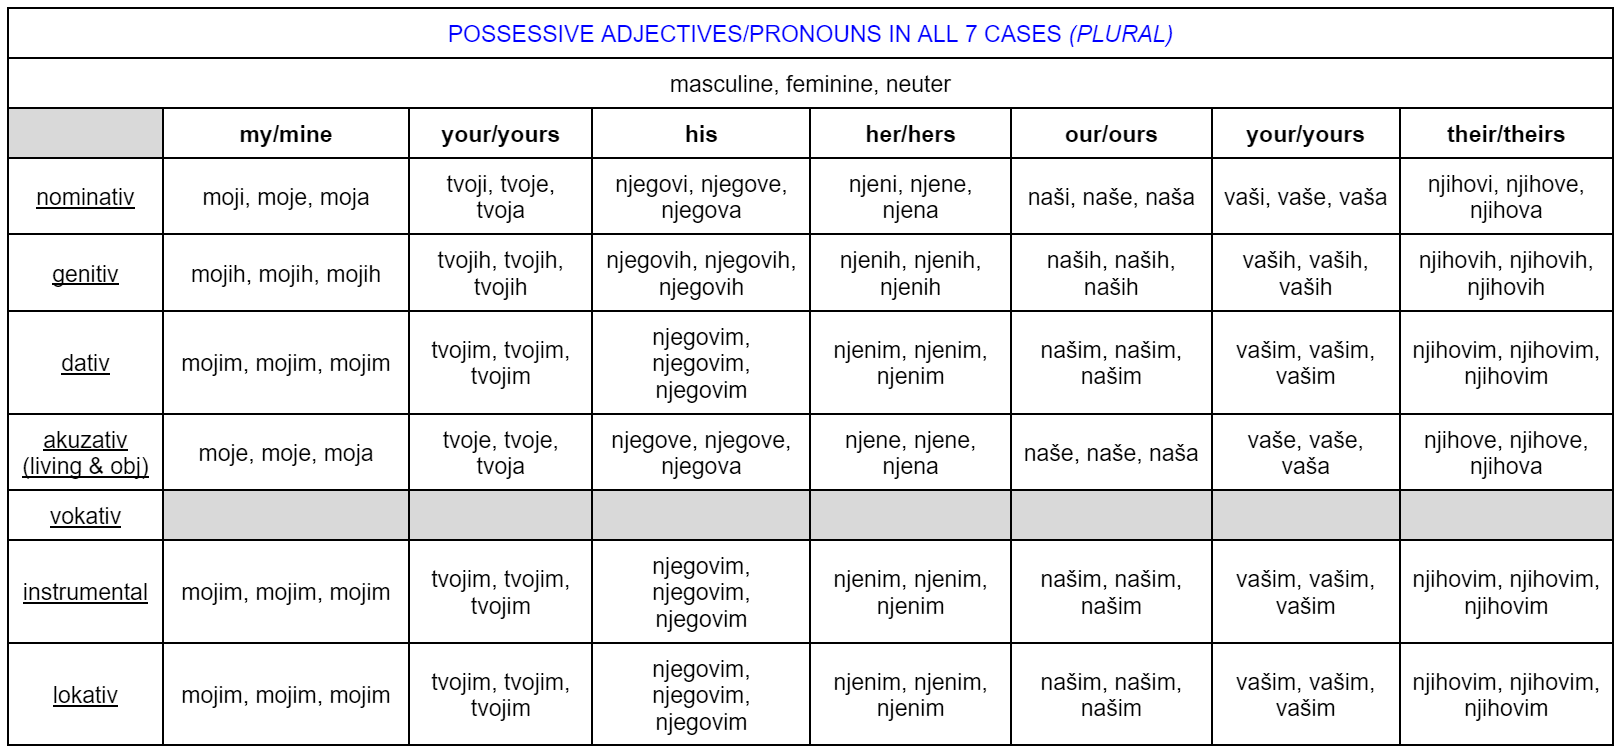 Possessive adjectives - pronouns (plural)